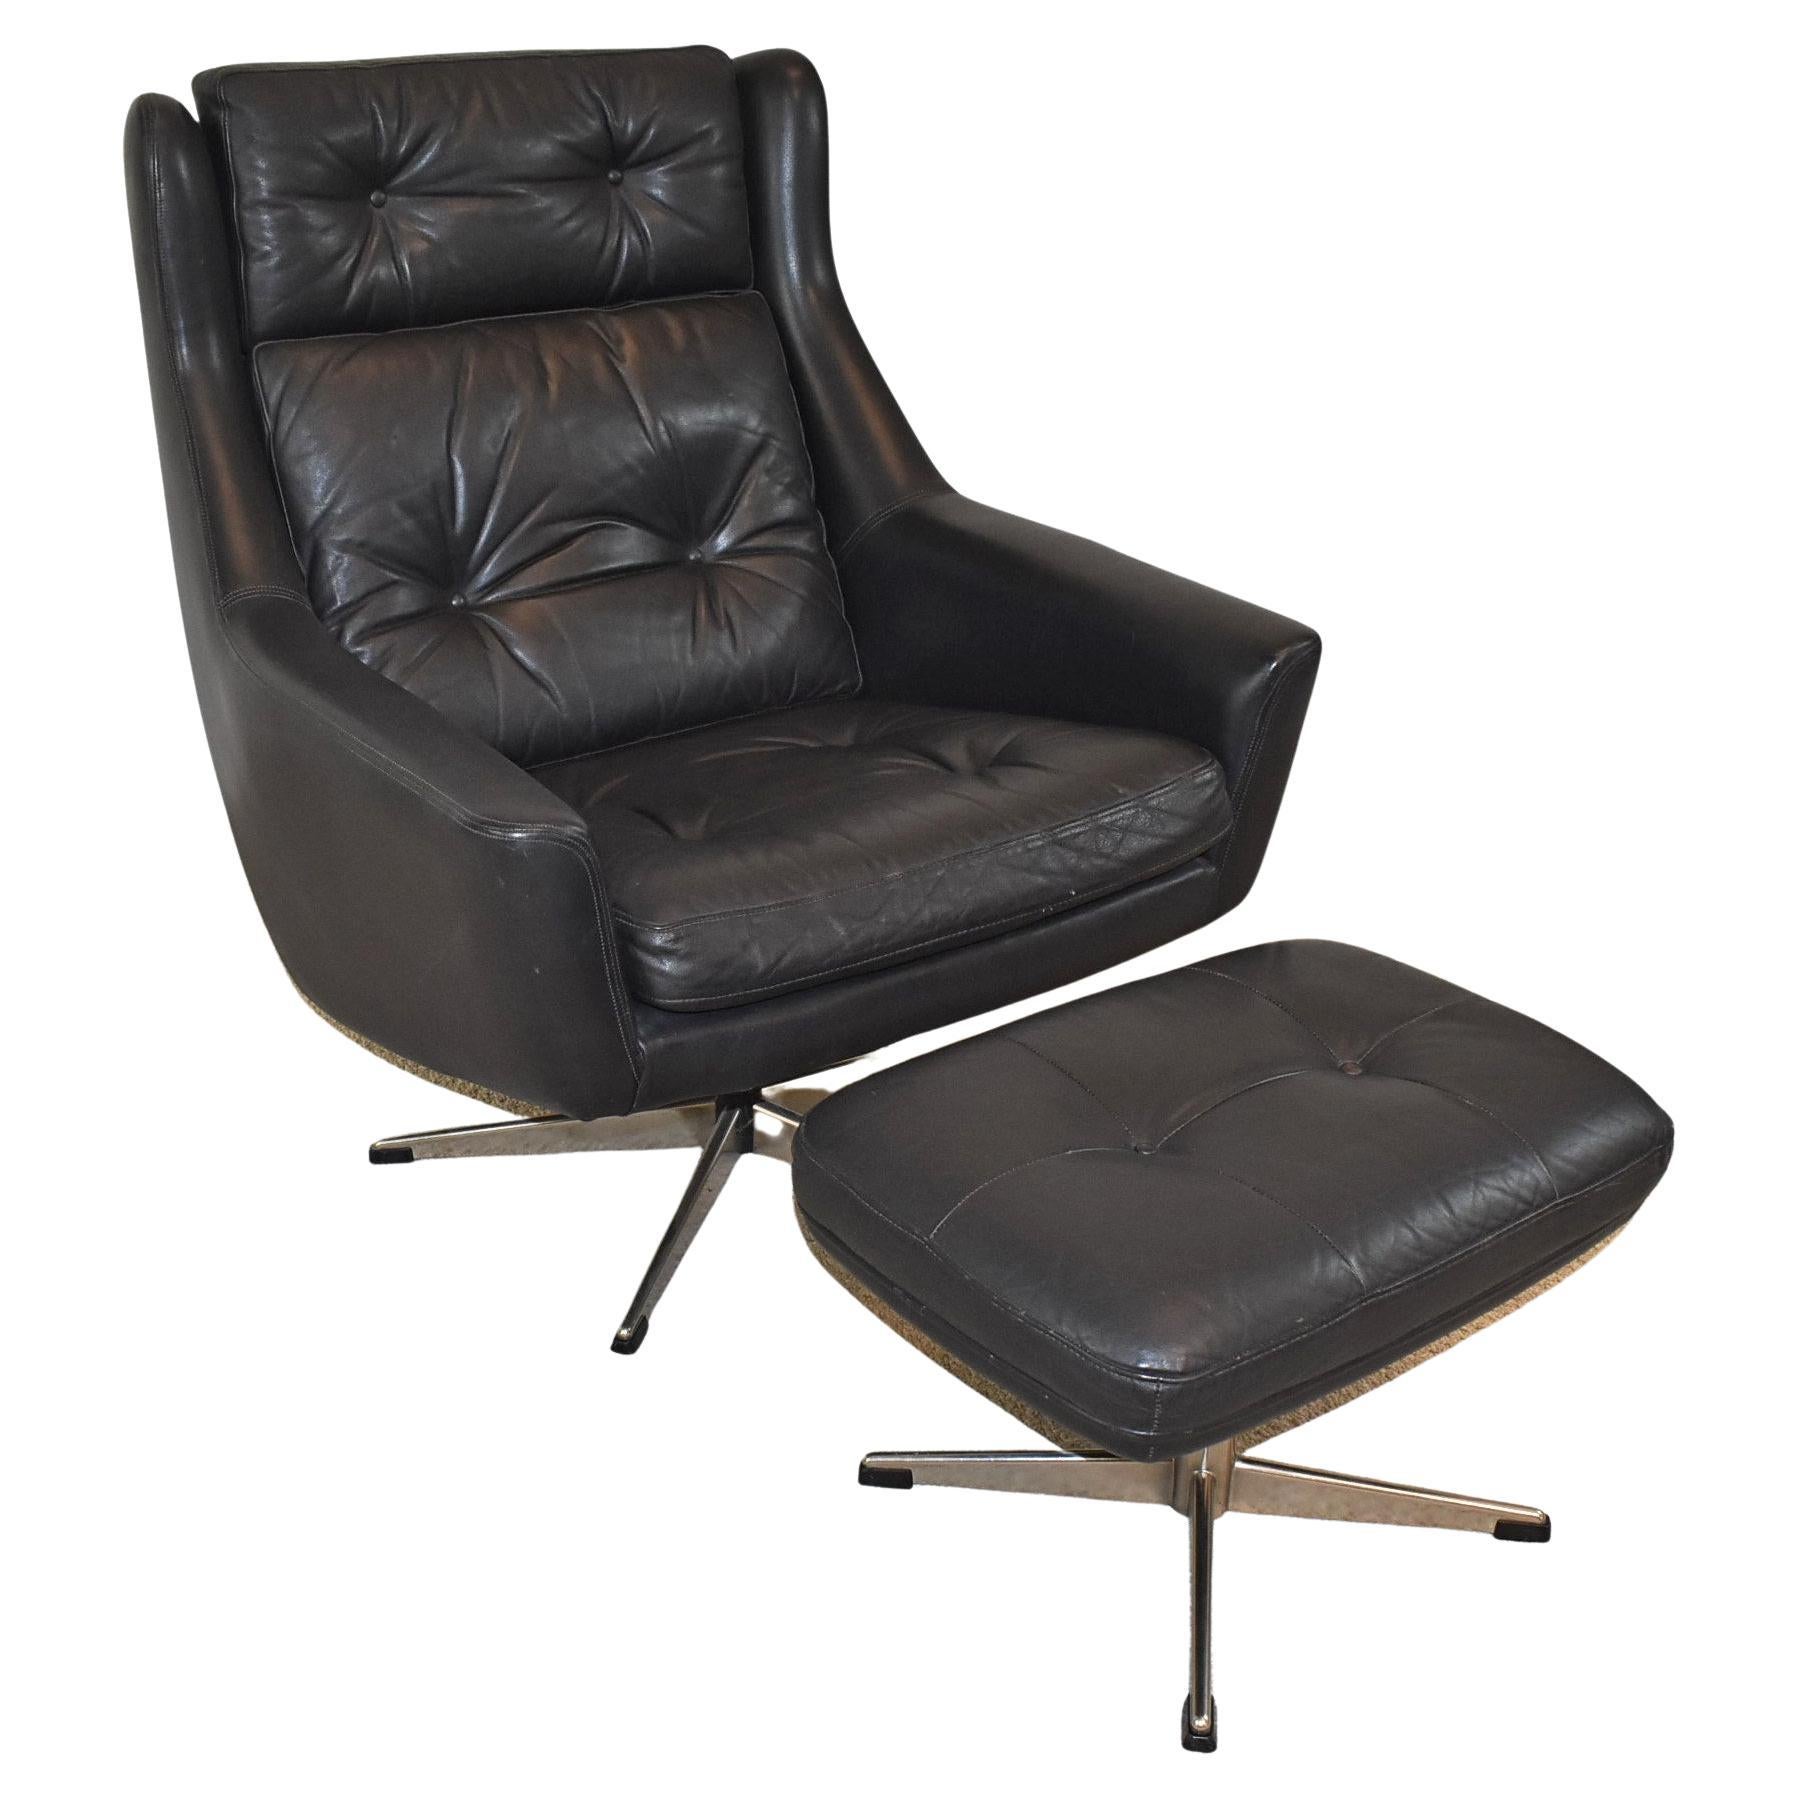 Erhardsen & Andersen, "Siesta" Chair with Ottoman, Black Leather, Lounge Chair en vente